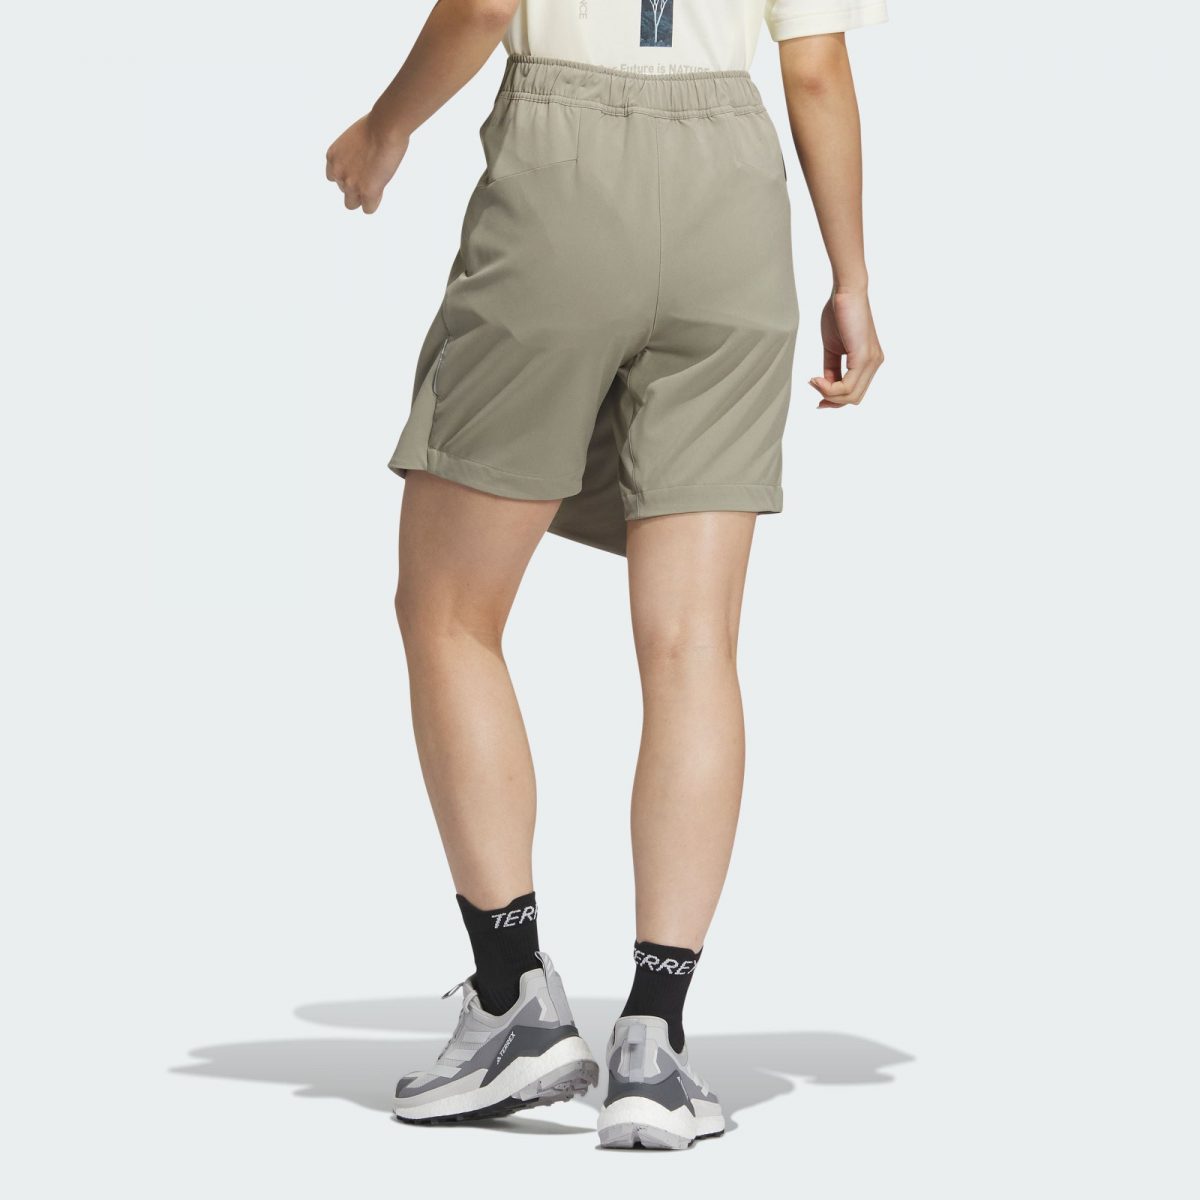 Женская юбка adidas NATIONAL GEOGRAPHIC SKIRT фотография